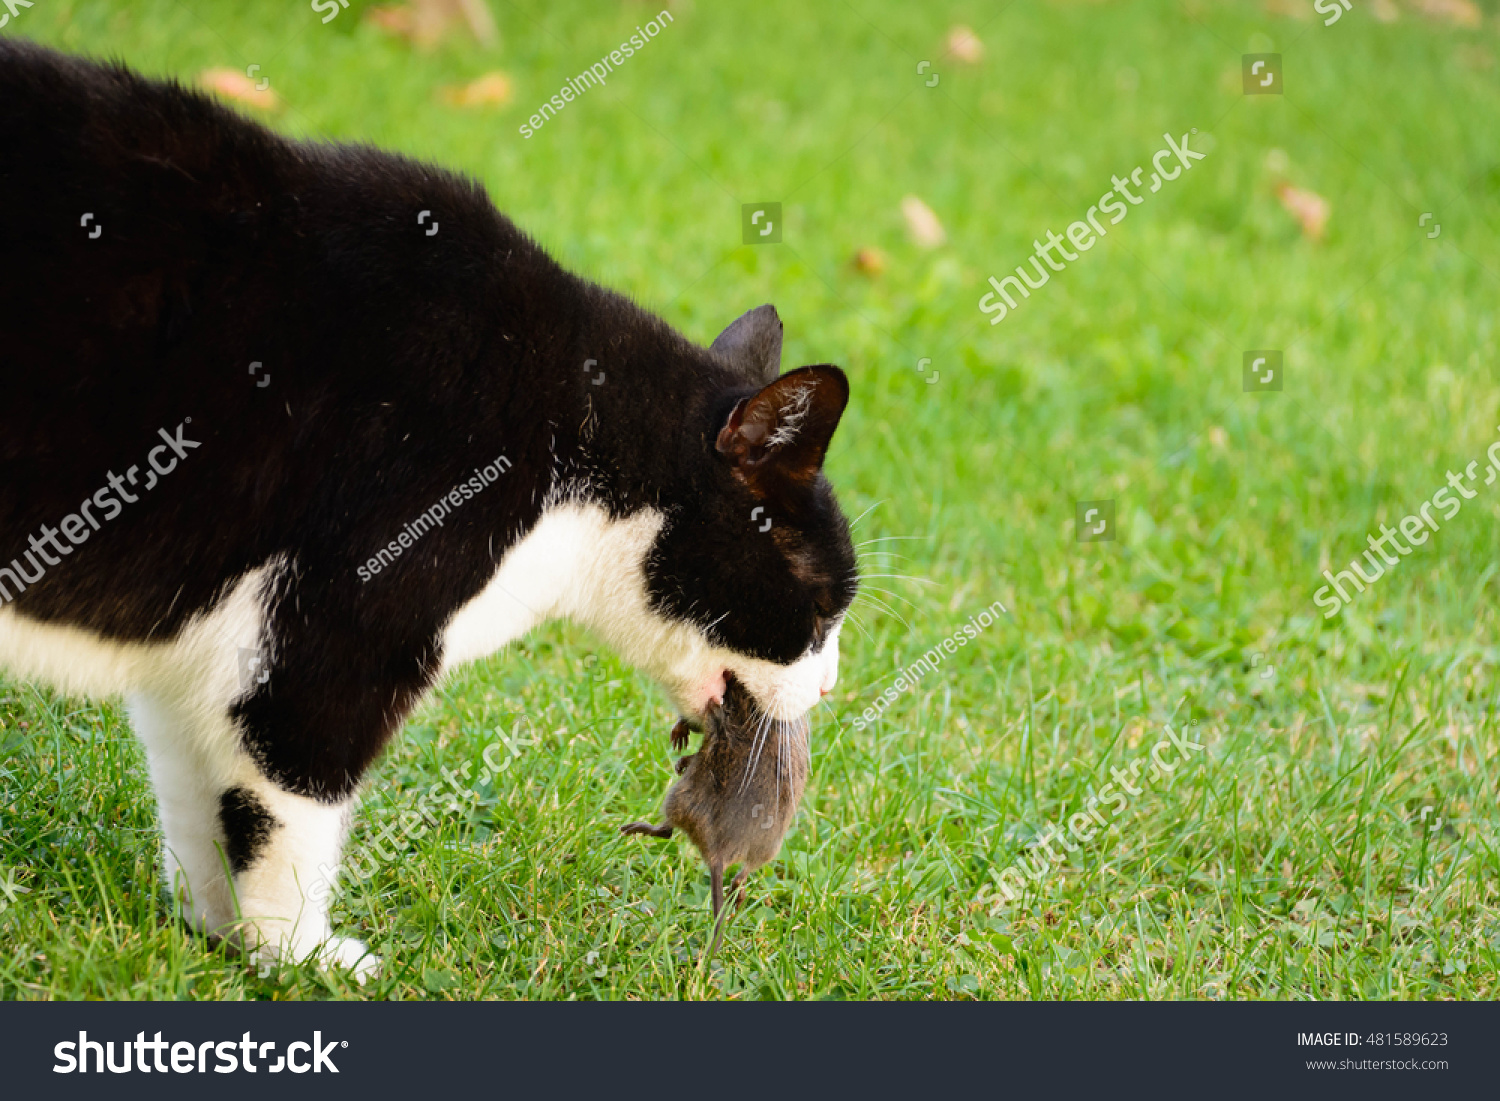 mouse prey